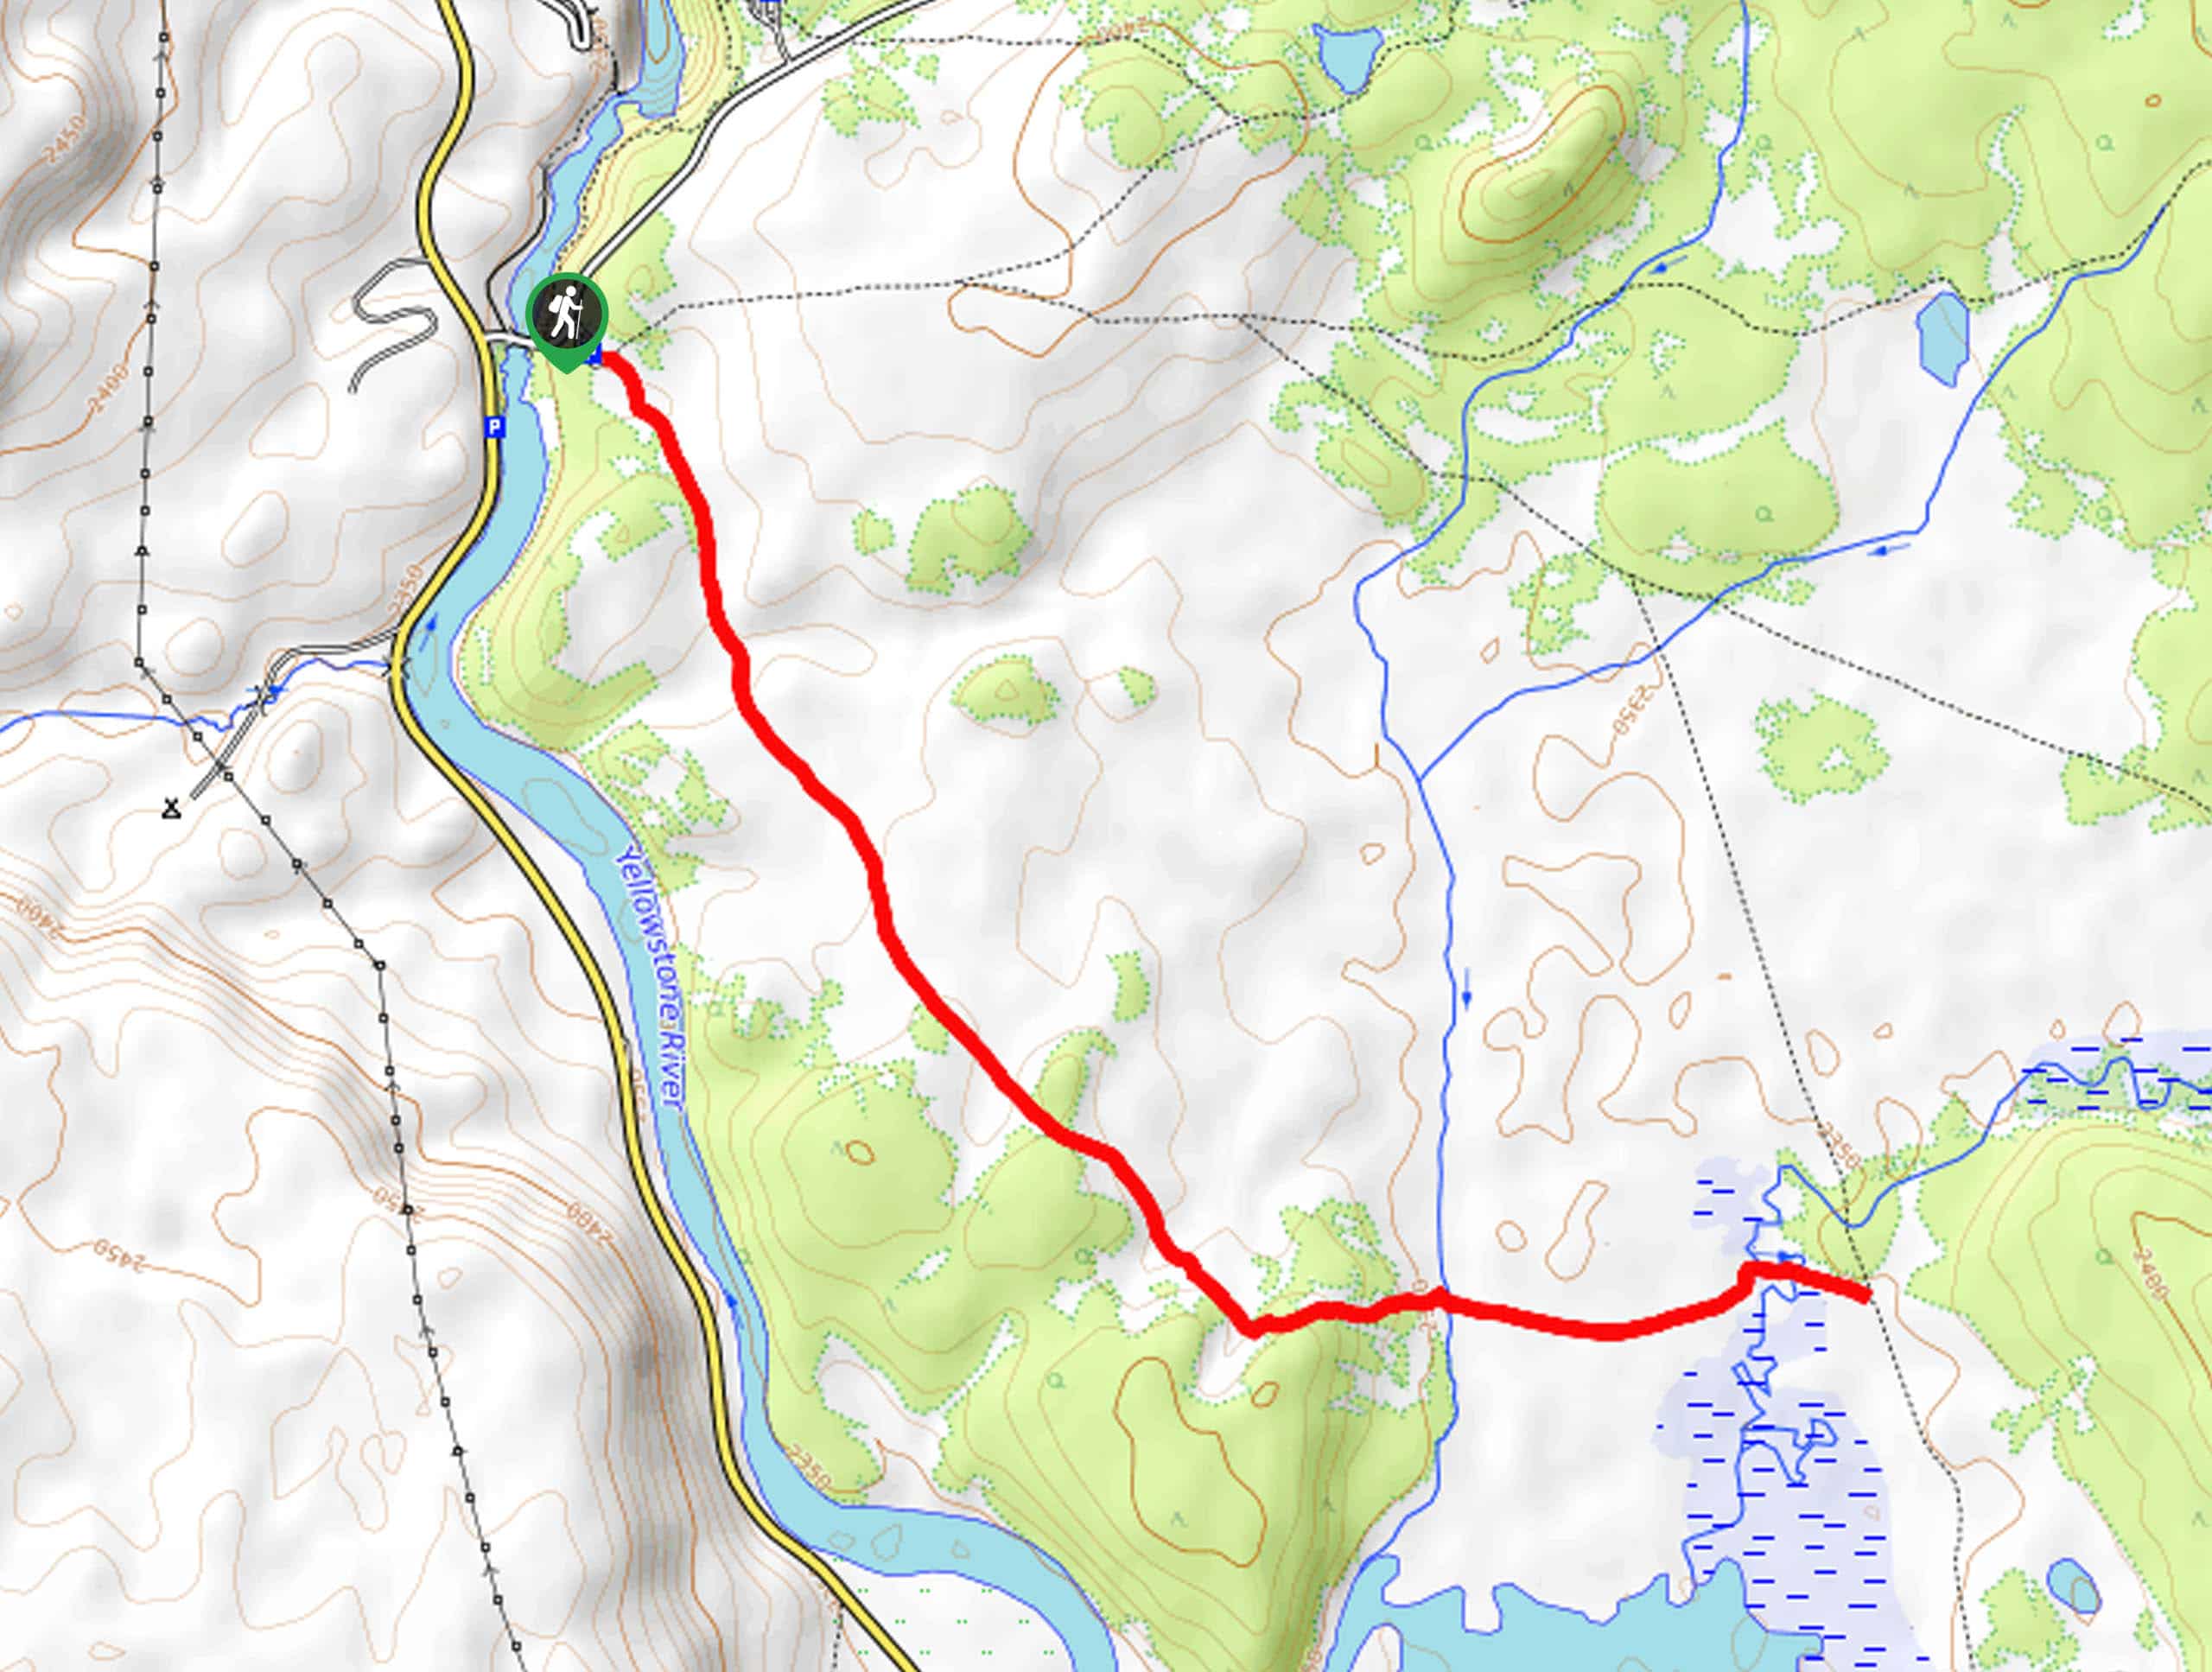 The Howard Eaton Trail vai the Wapiti Lake Trailhead Map